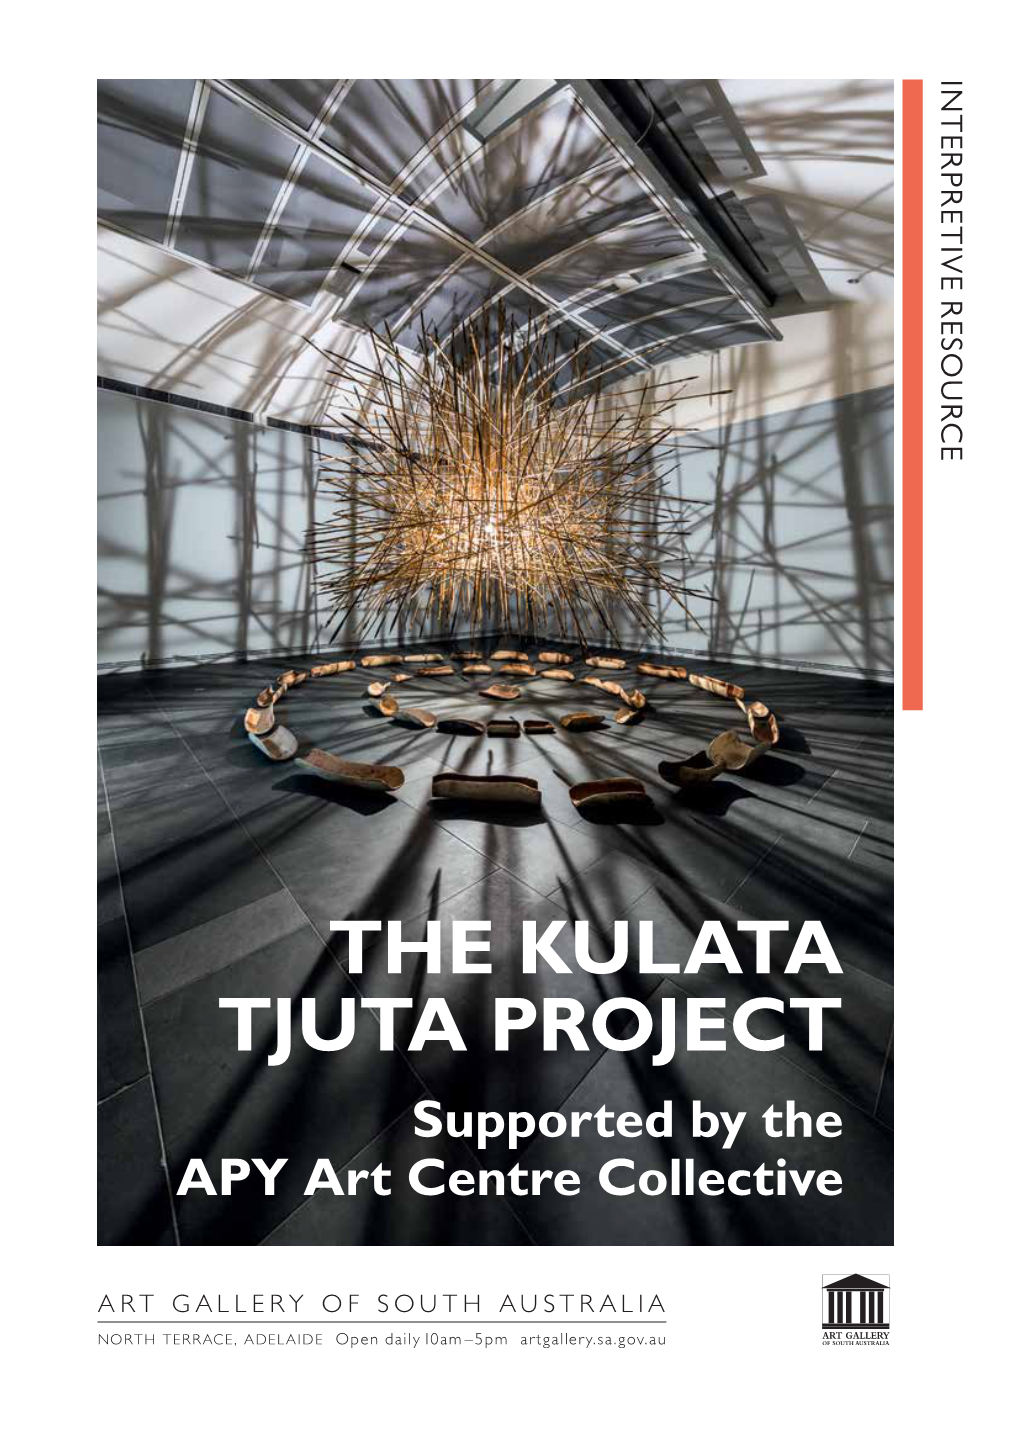 The Kulata Tjuta Project